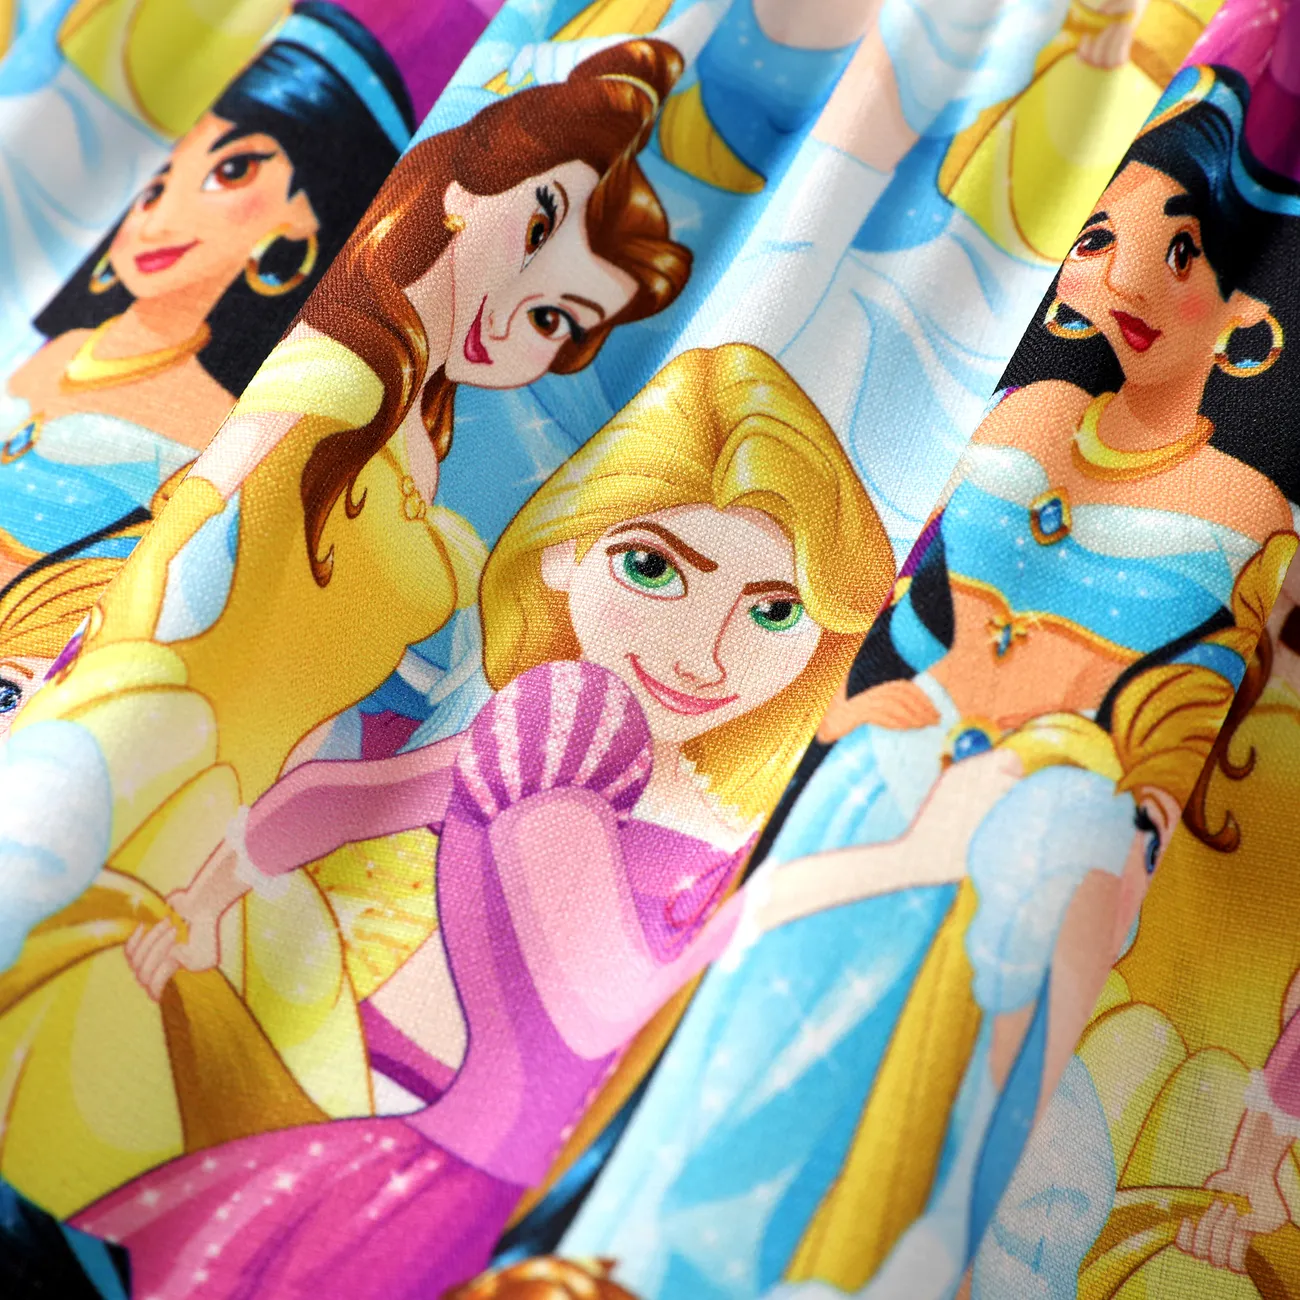 Disney Princess 1pc Toddler Girls All Princess Character Print Ruffled-Sleeve with Bowknot Dress

 Multi-color big image 1